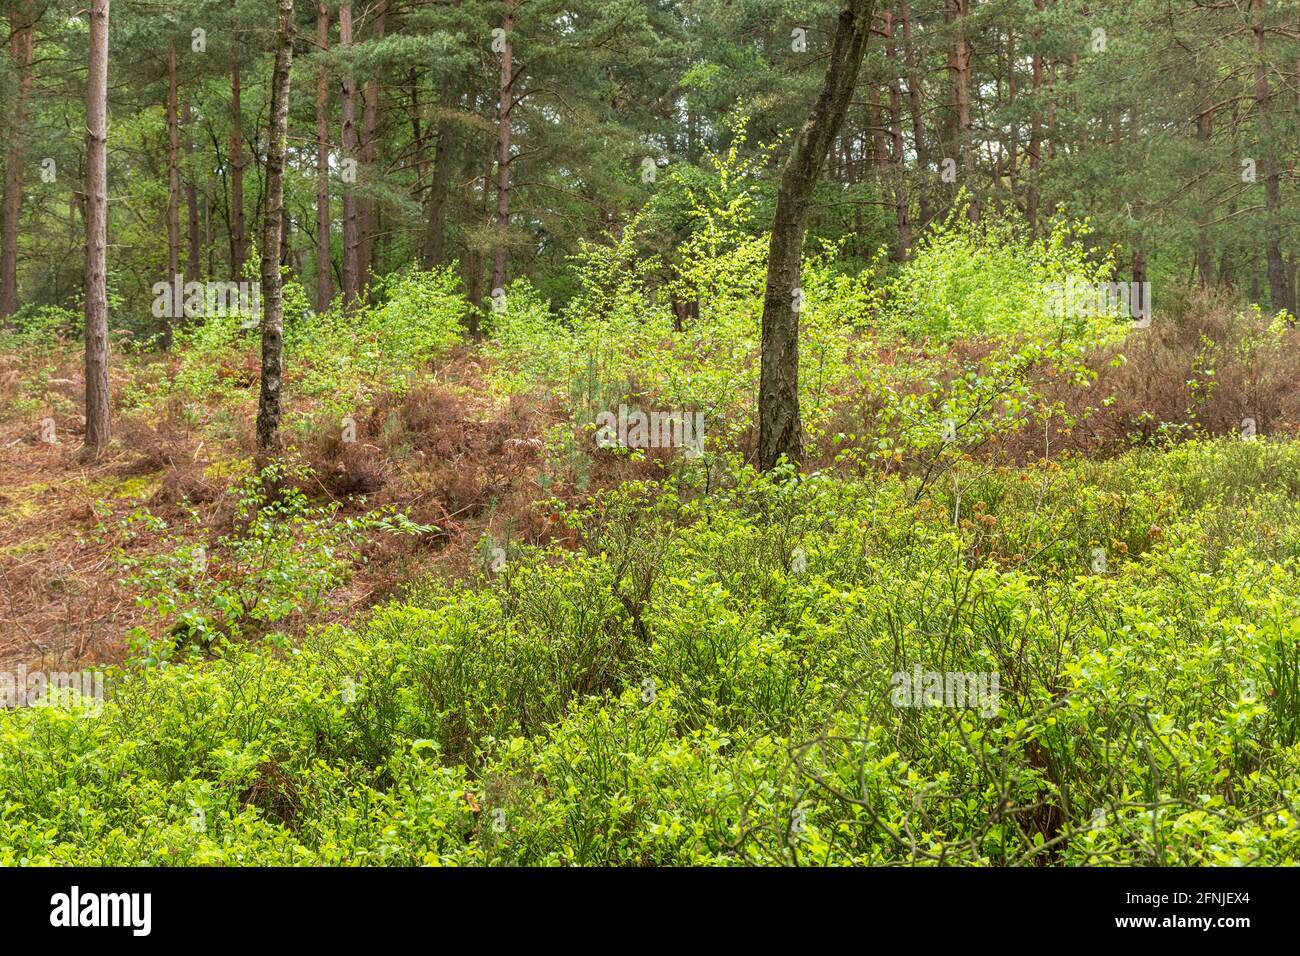 Understorey vegetation in a scots pine (Pinus sylvestris) forest plantation in Surrey, UK, including bilberry (Vaccinium myrtillus) and silver birch Stock Photo